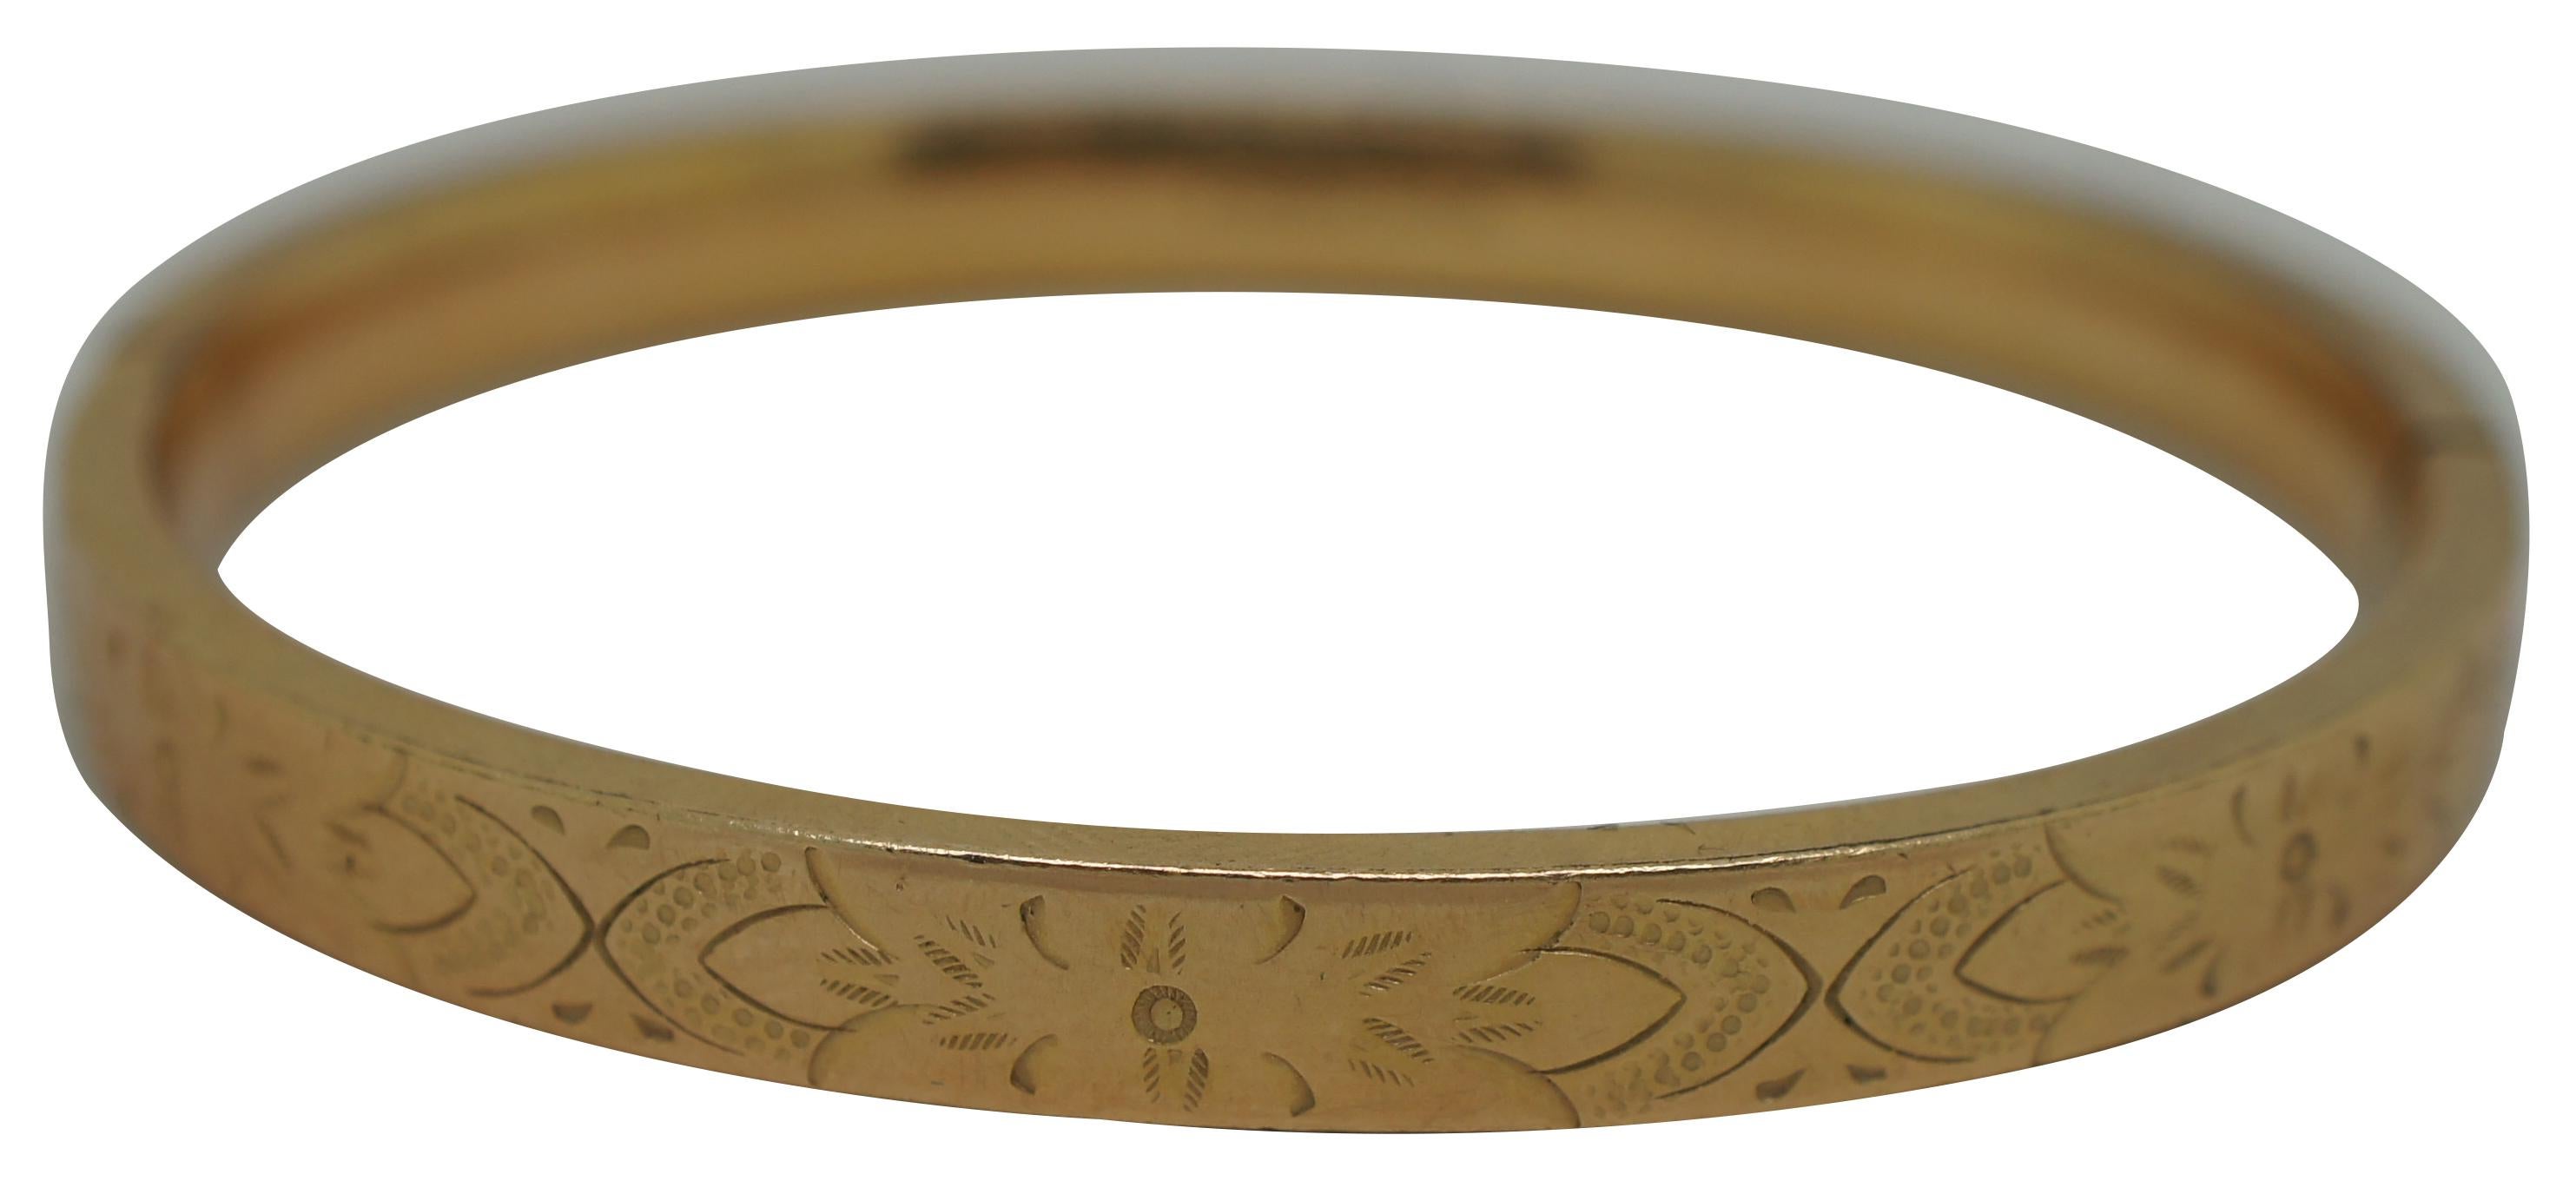 Antique Victorian Winard 12K gold filled bangle bracelet with a simple art deco etched floral design.  Marked 8 (size?) - Winward 12KT G,F.